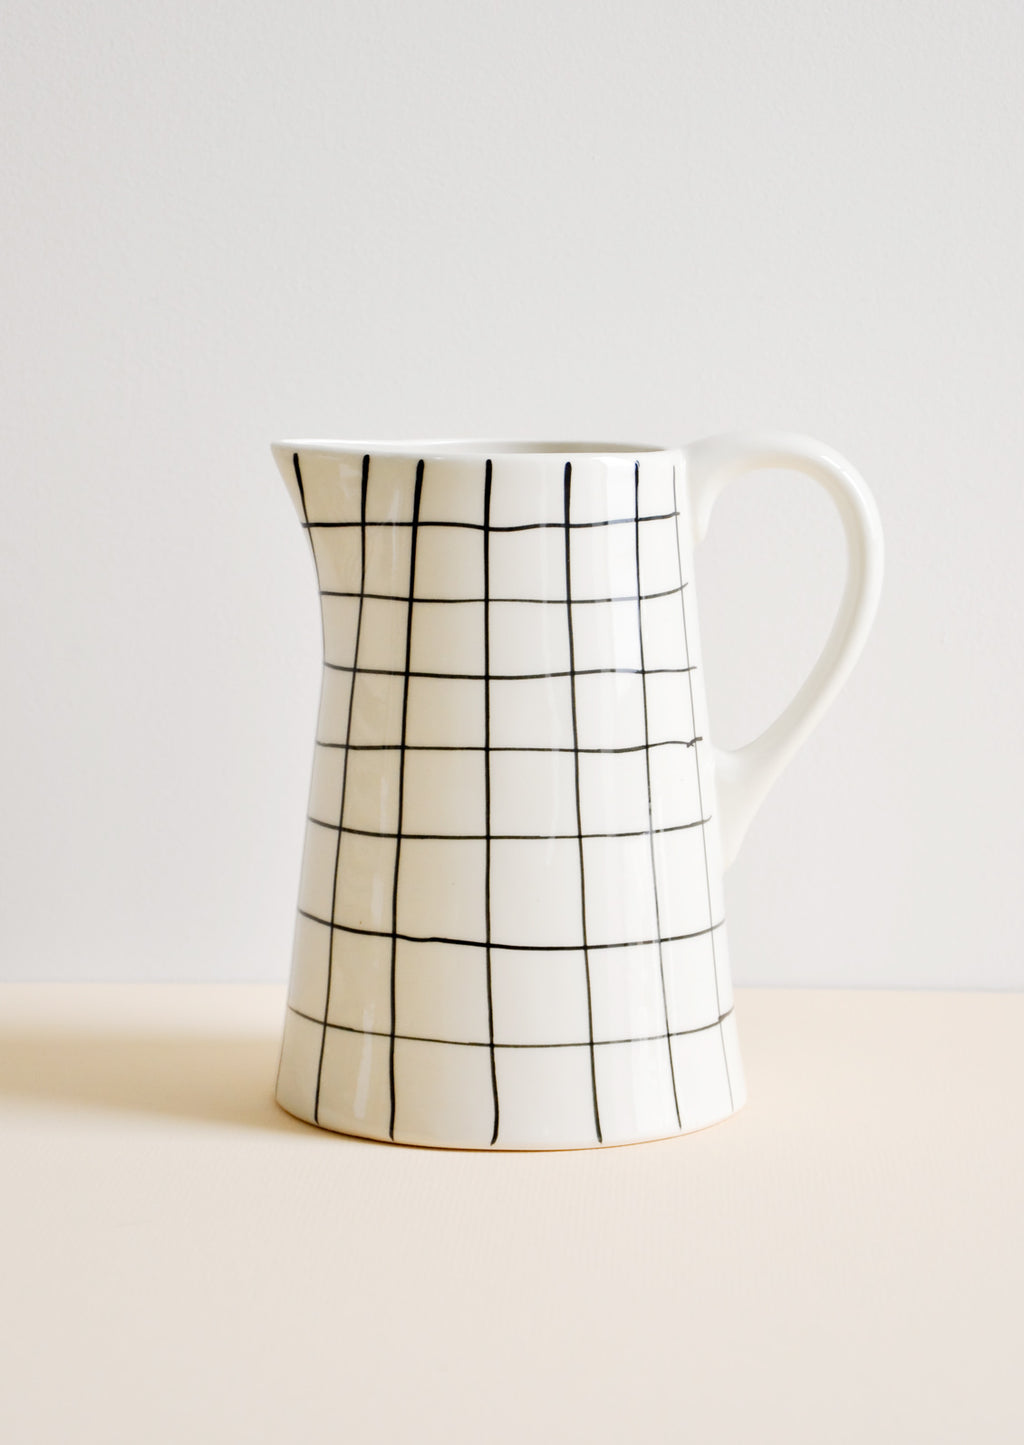 2: Grid Print Ceramic Pitcher in White & Black - LEIF